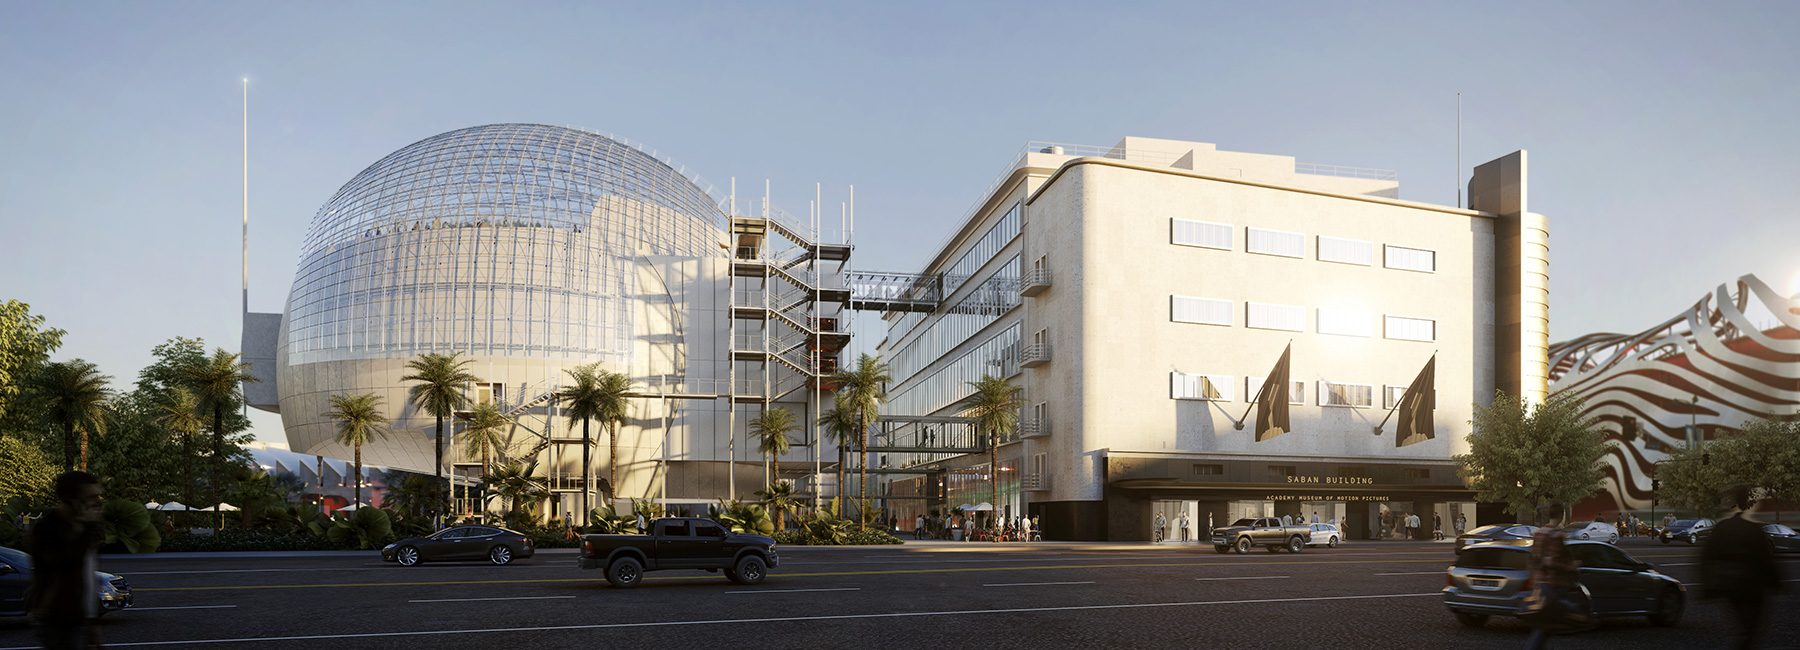 LA's renzo piano-designed academy museum to open in 2019